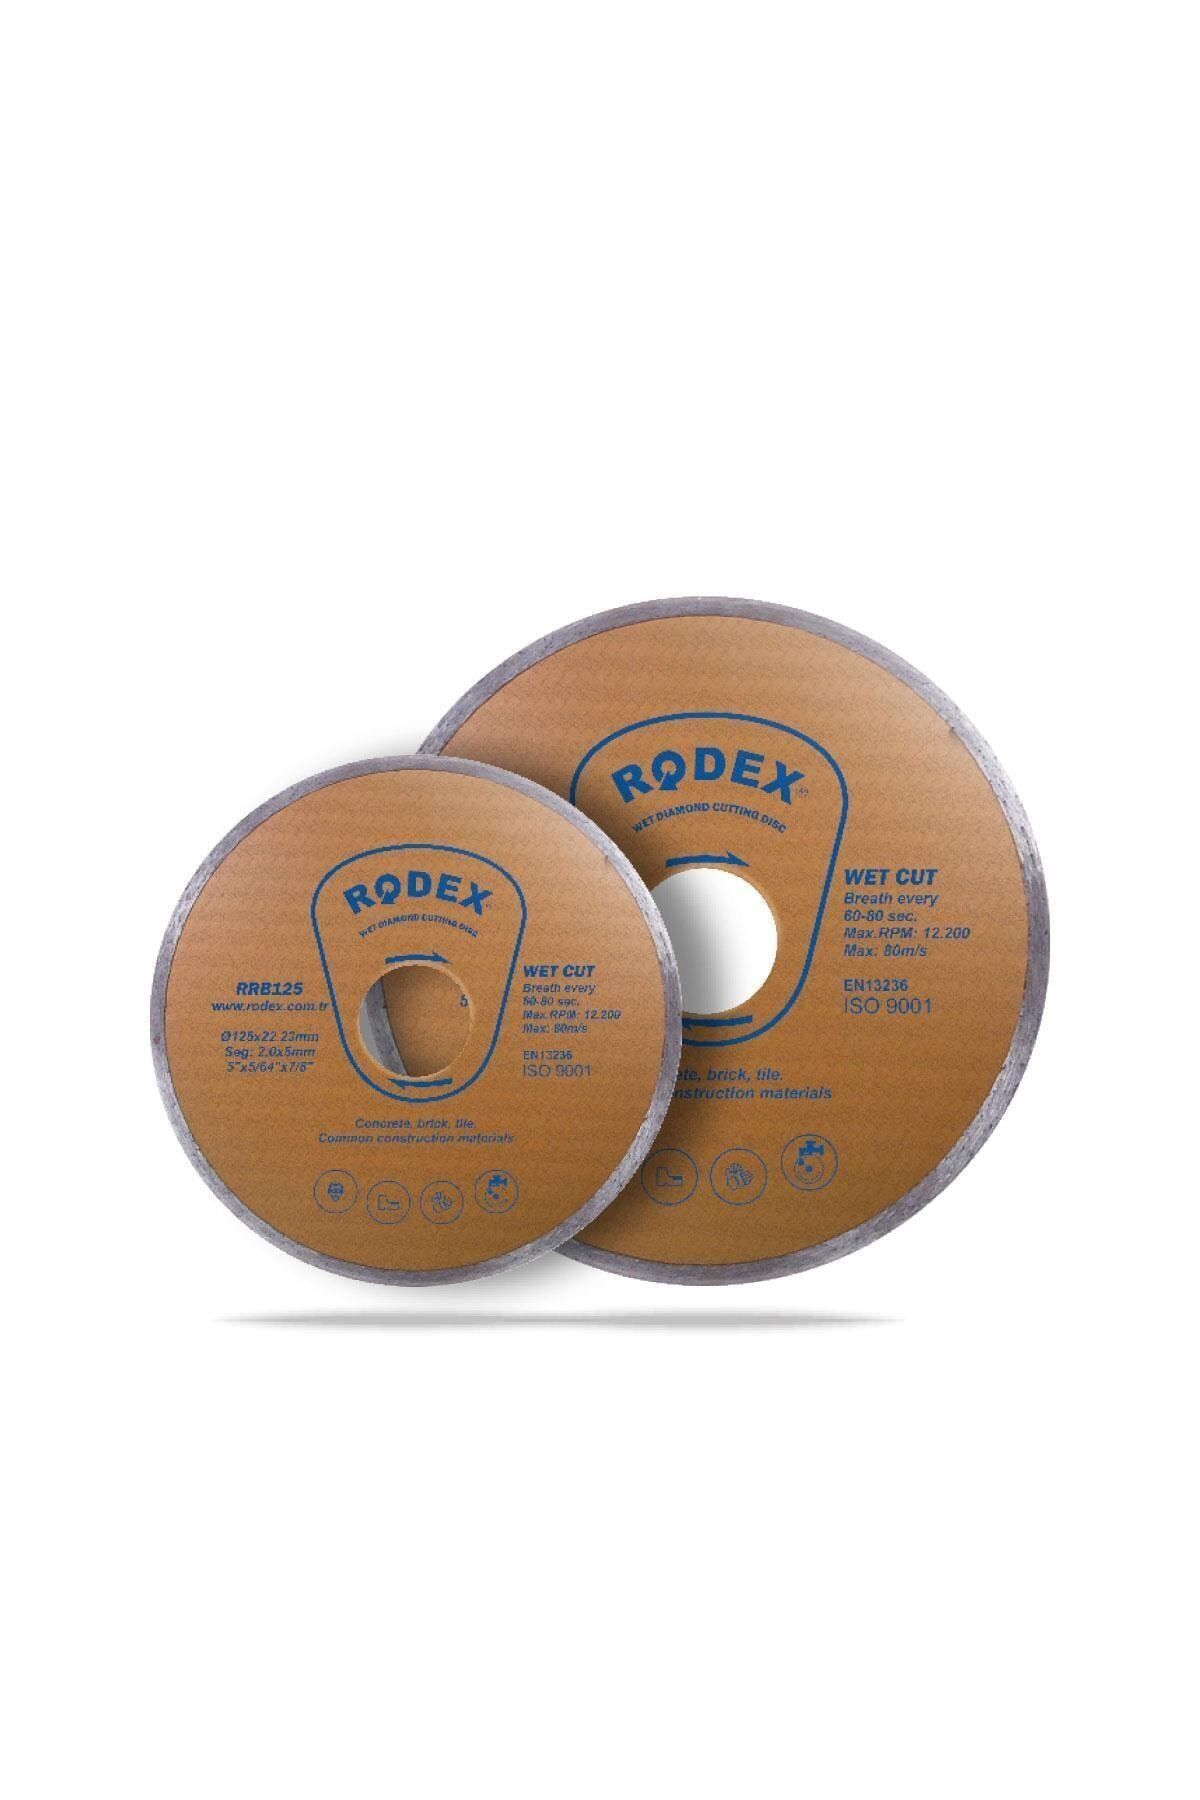 Rodex Rrb115 Sürekli Tip Elmas Tuğla, Granit, Mermer Kesme Diski 115mm